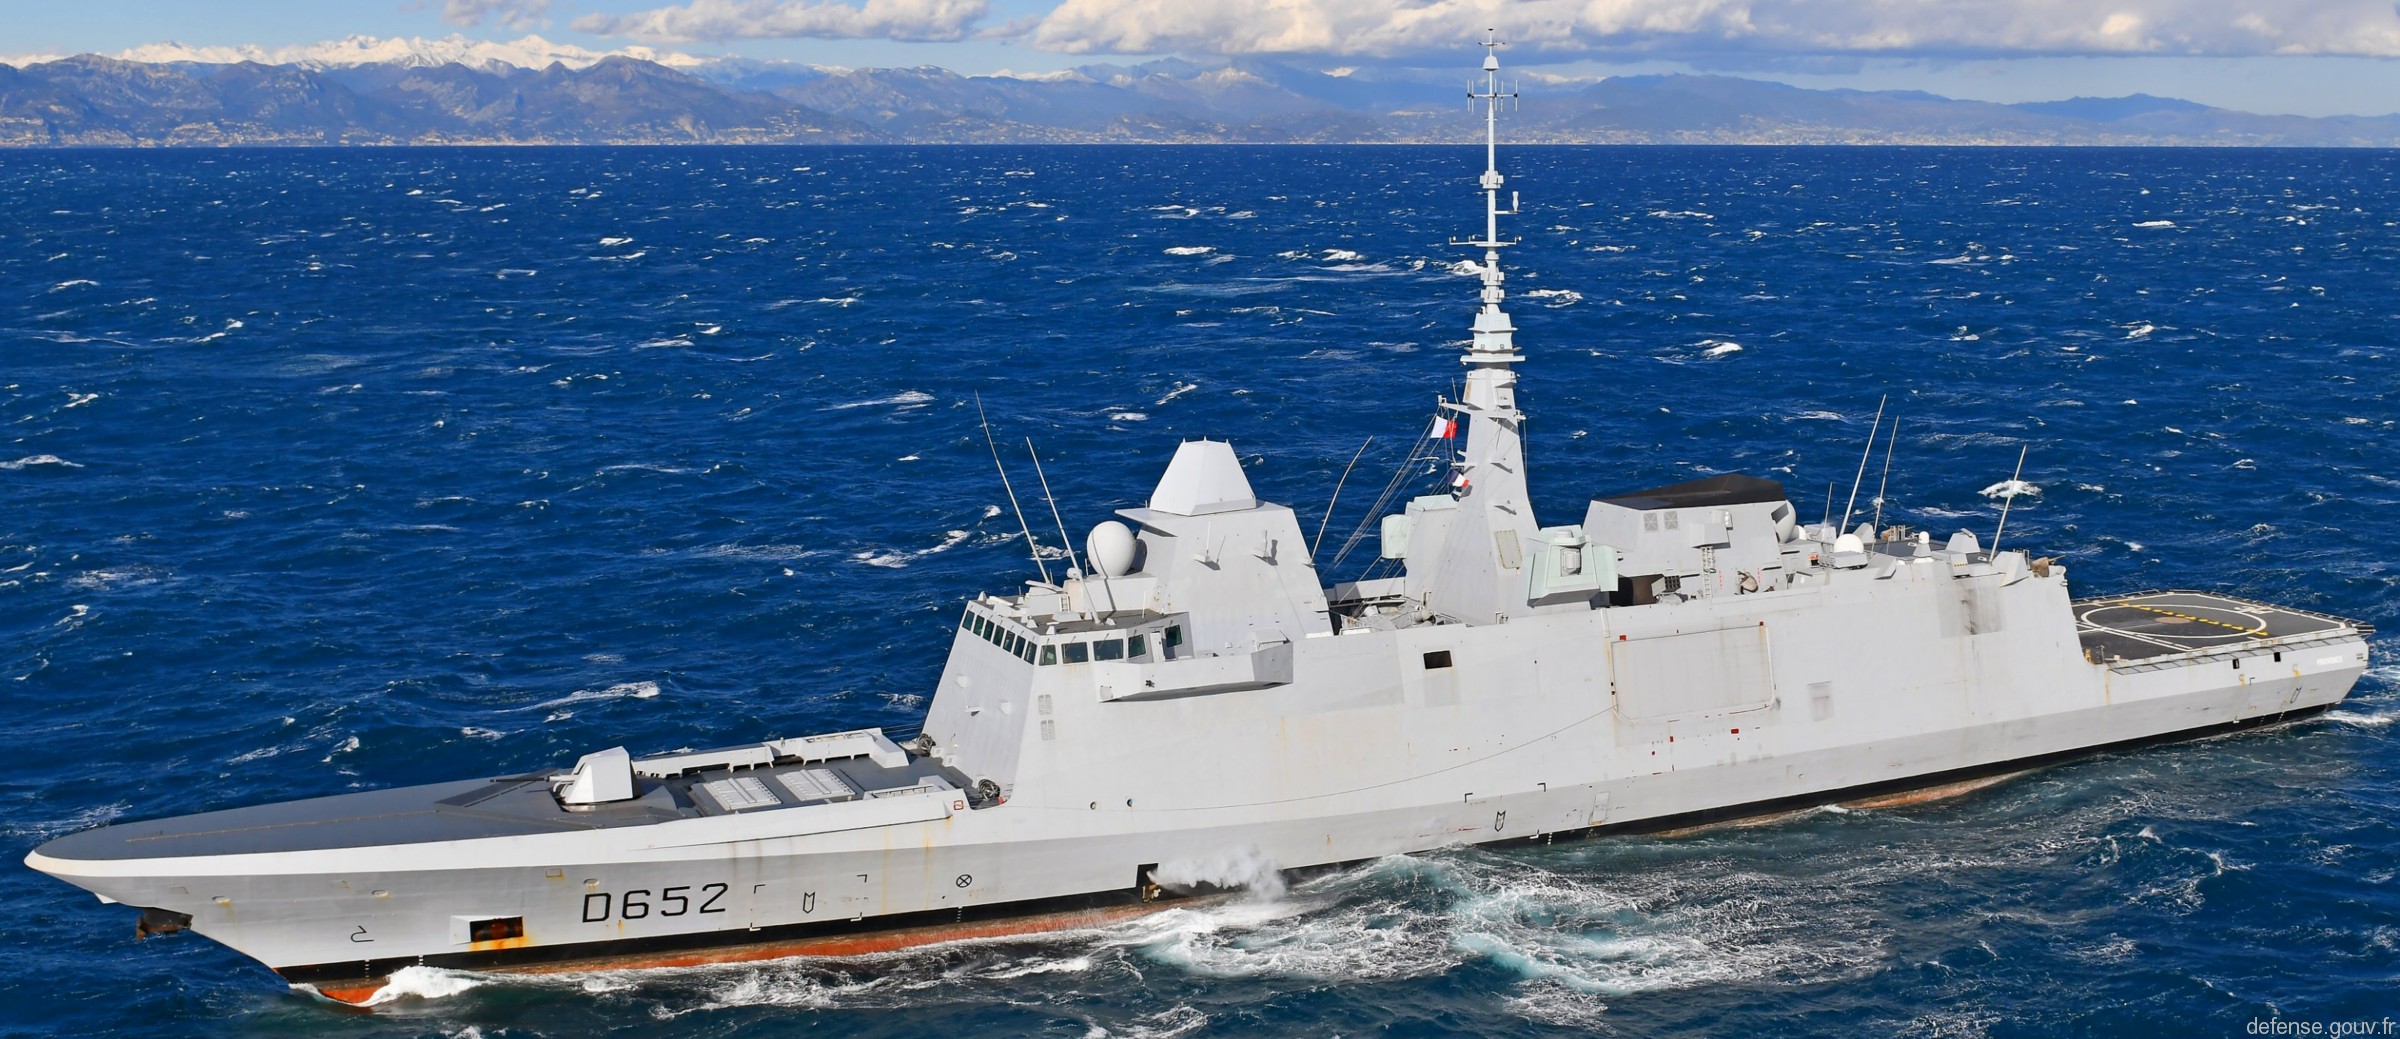 d-652 fs provence fremm aquitaine class frigate fregate multi purpose french navy marine nationale 18